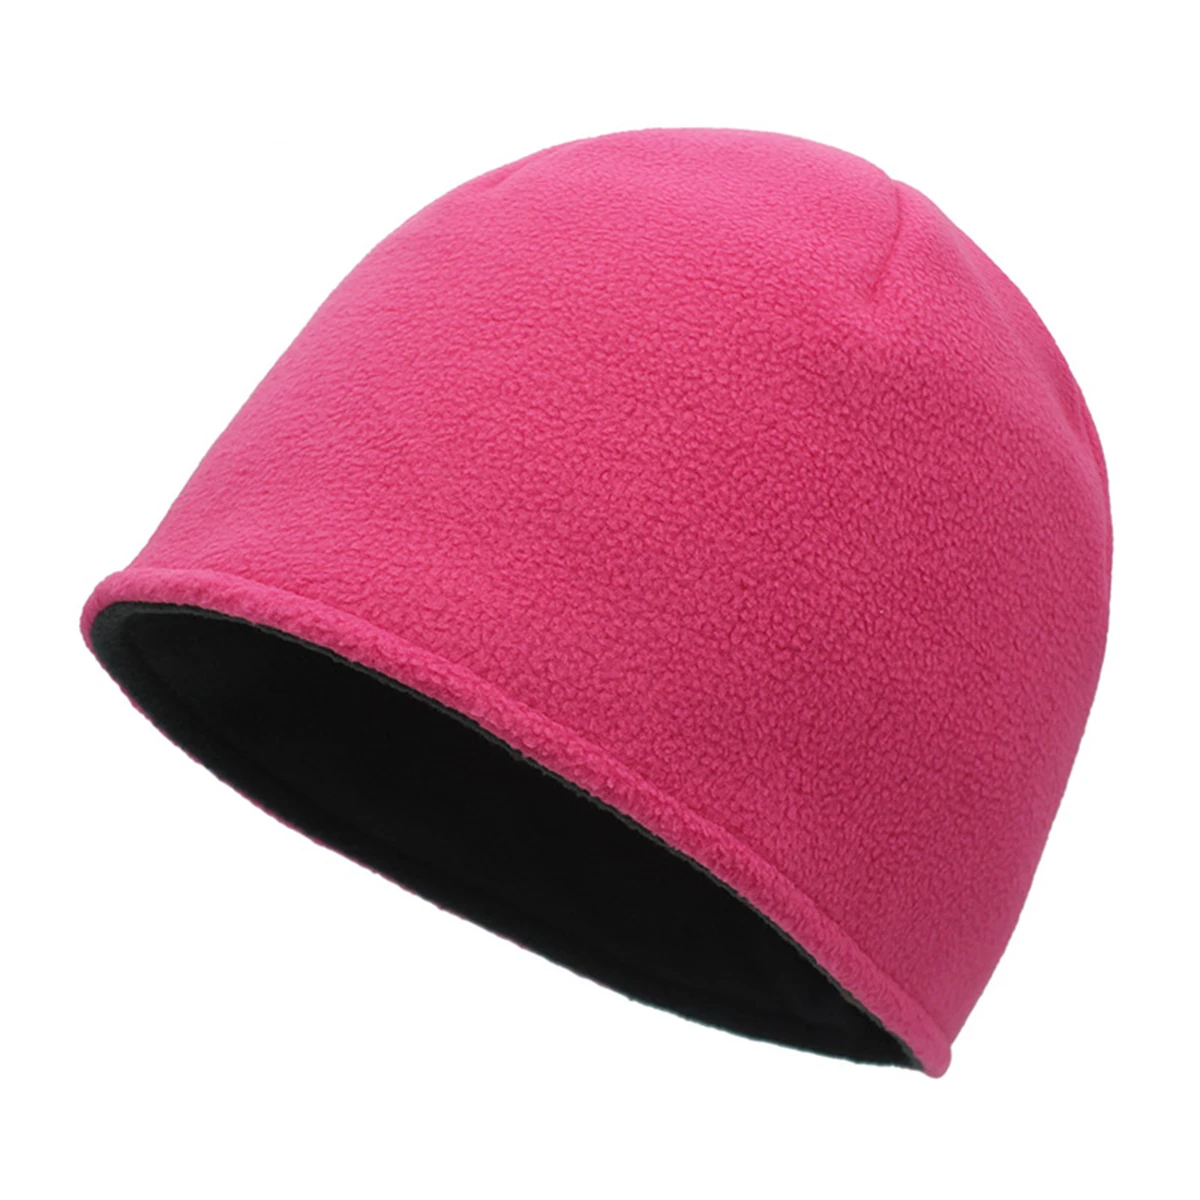 

Connectyle Men's Women Winter Hat Soft Lightweight Beanie Cap Earflap Reversible Male Female Daily Warm Casual Watch Cap